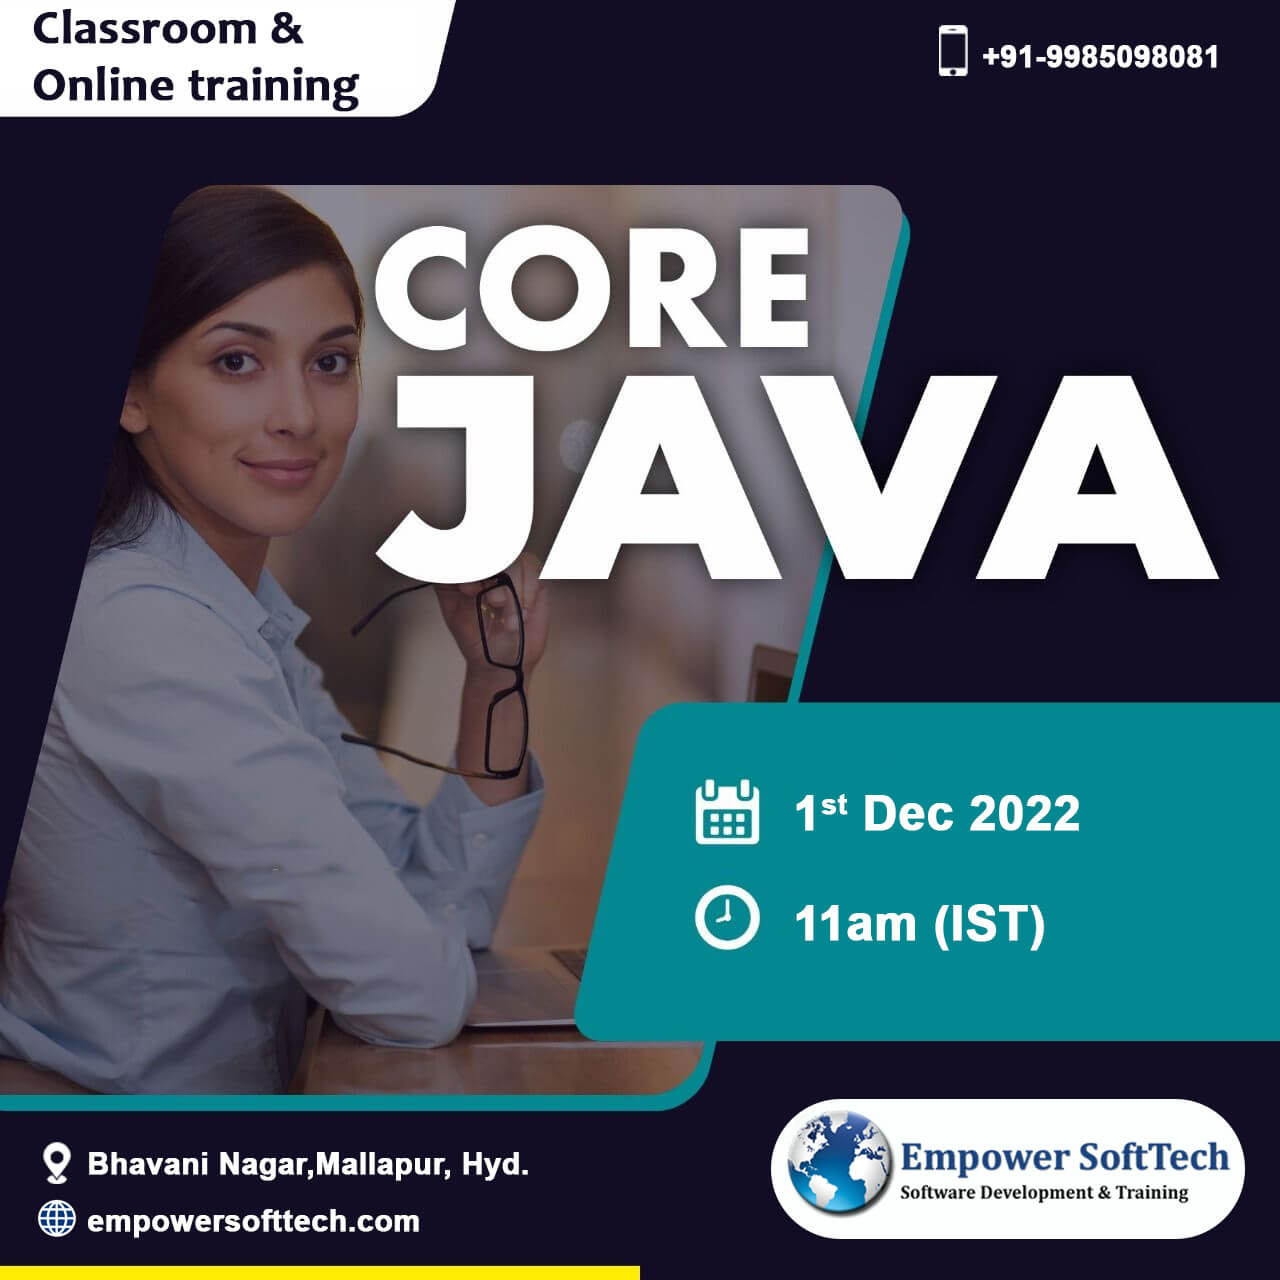 Core Java training in Hyderabad